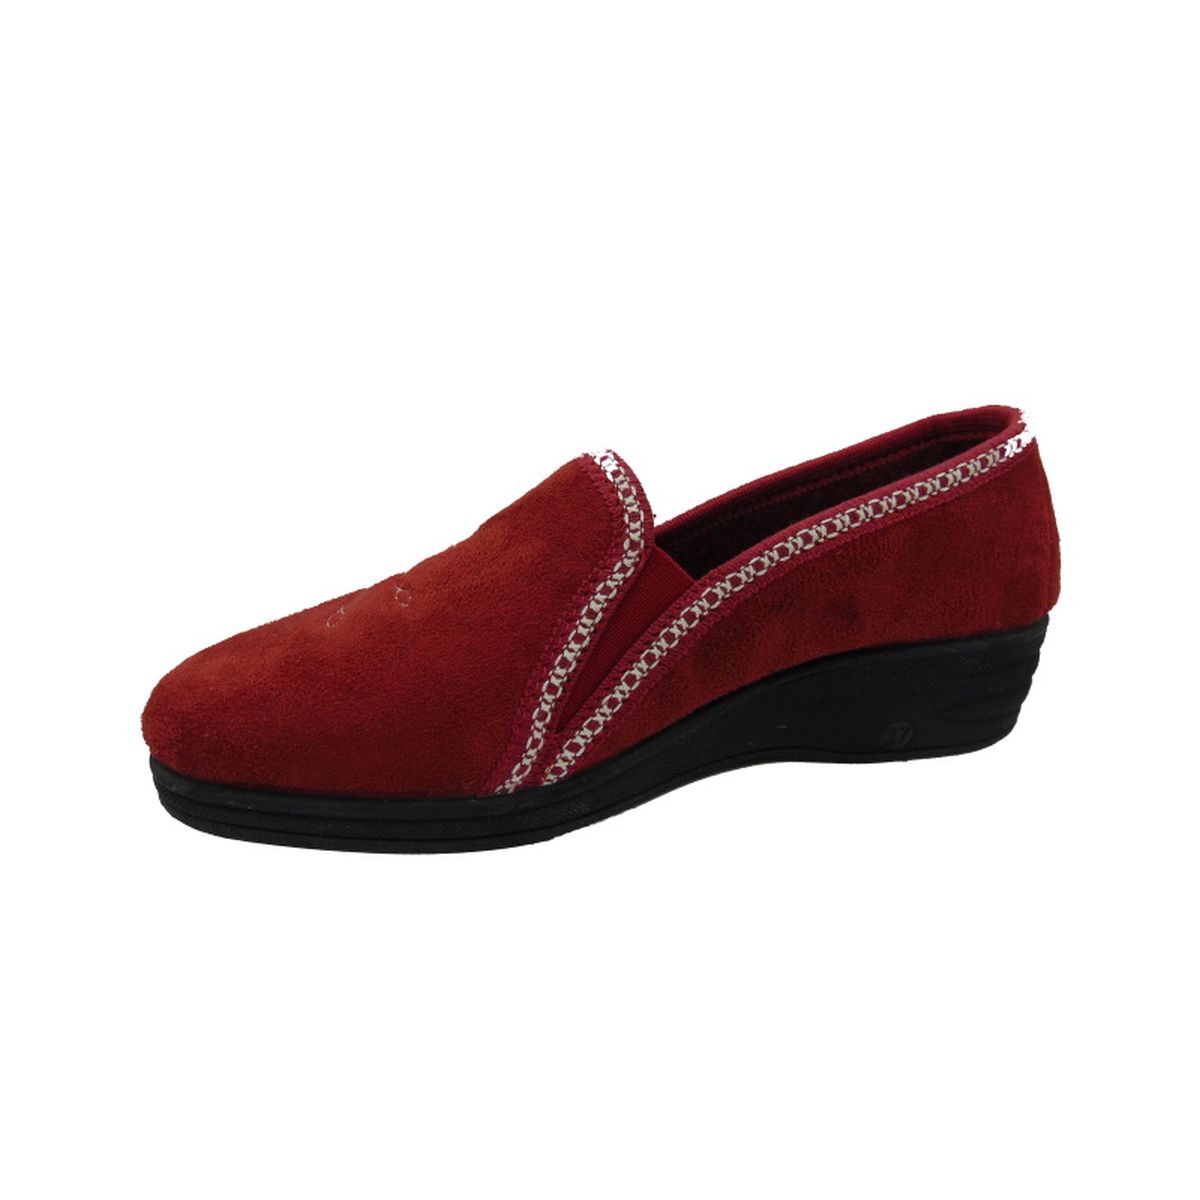 Pantofola Donna con elastici laterali Emanuela 855 Bordeauximg_2